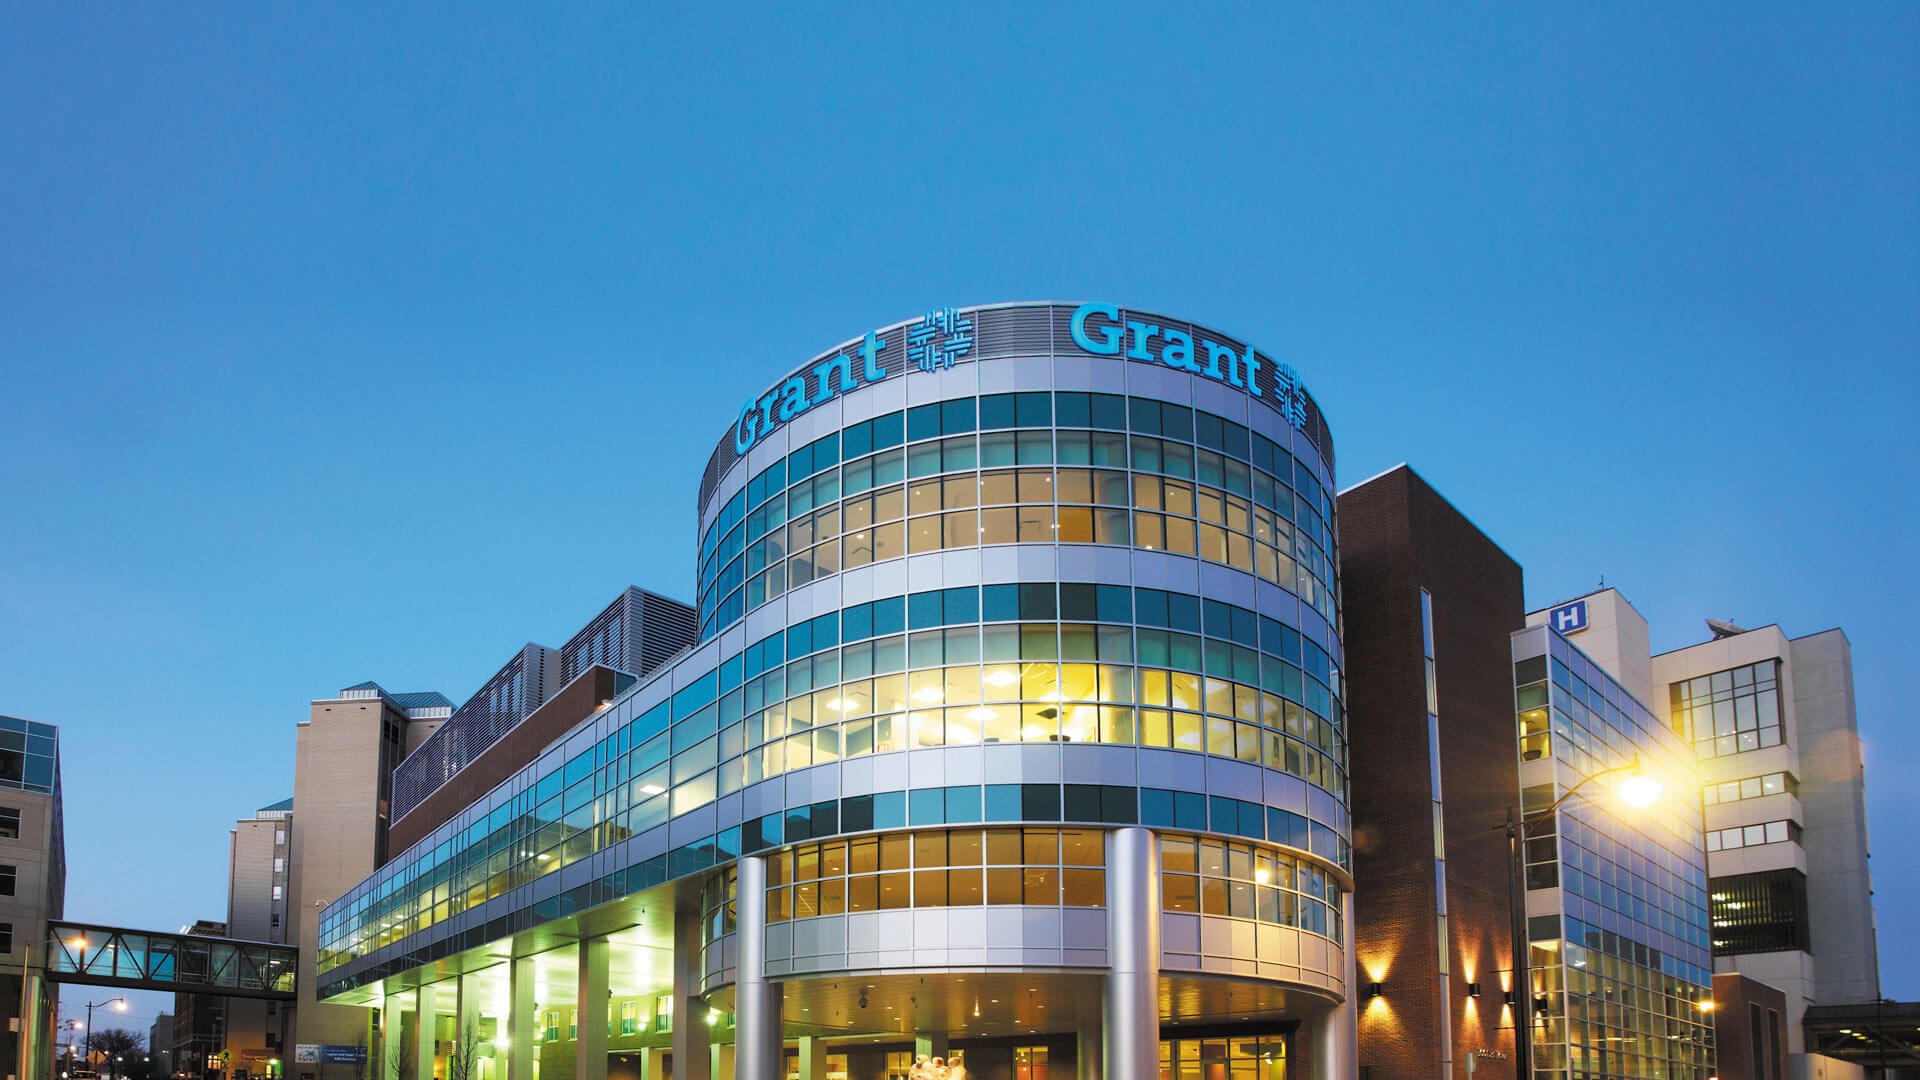 OhioHealth Grant Medical Center